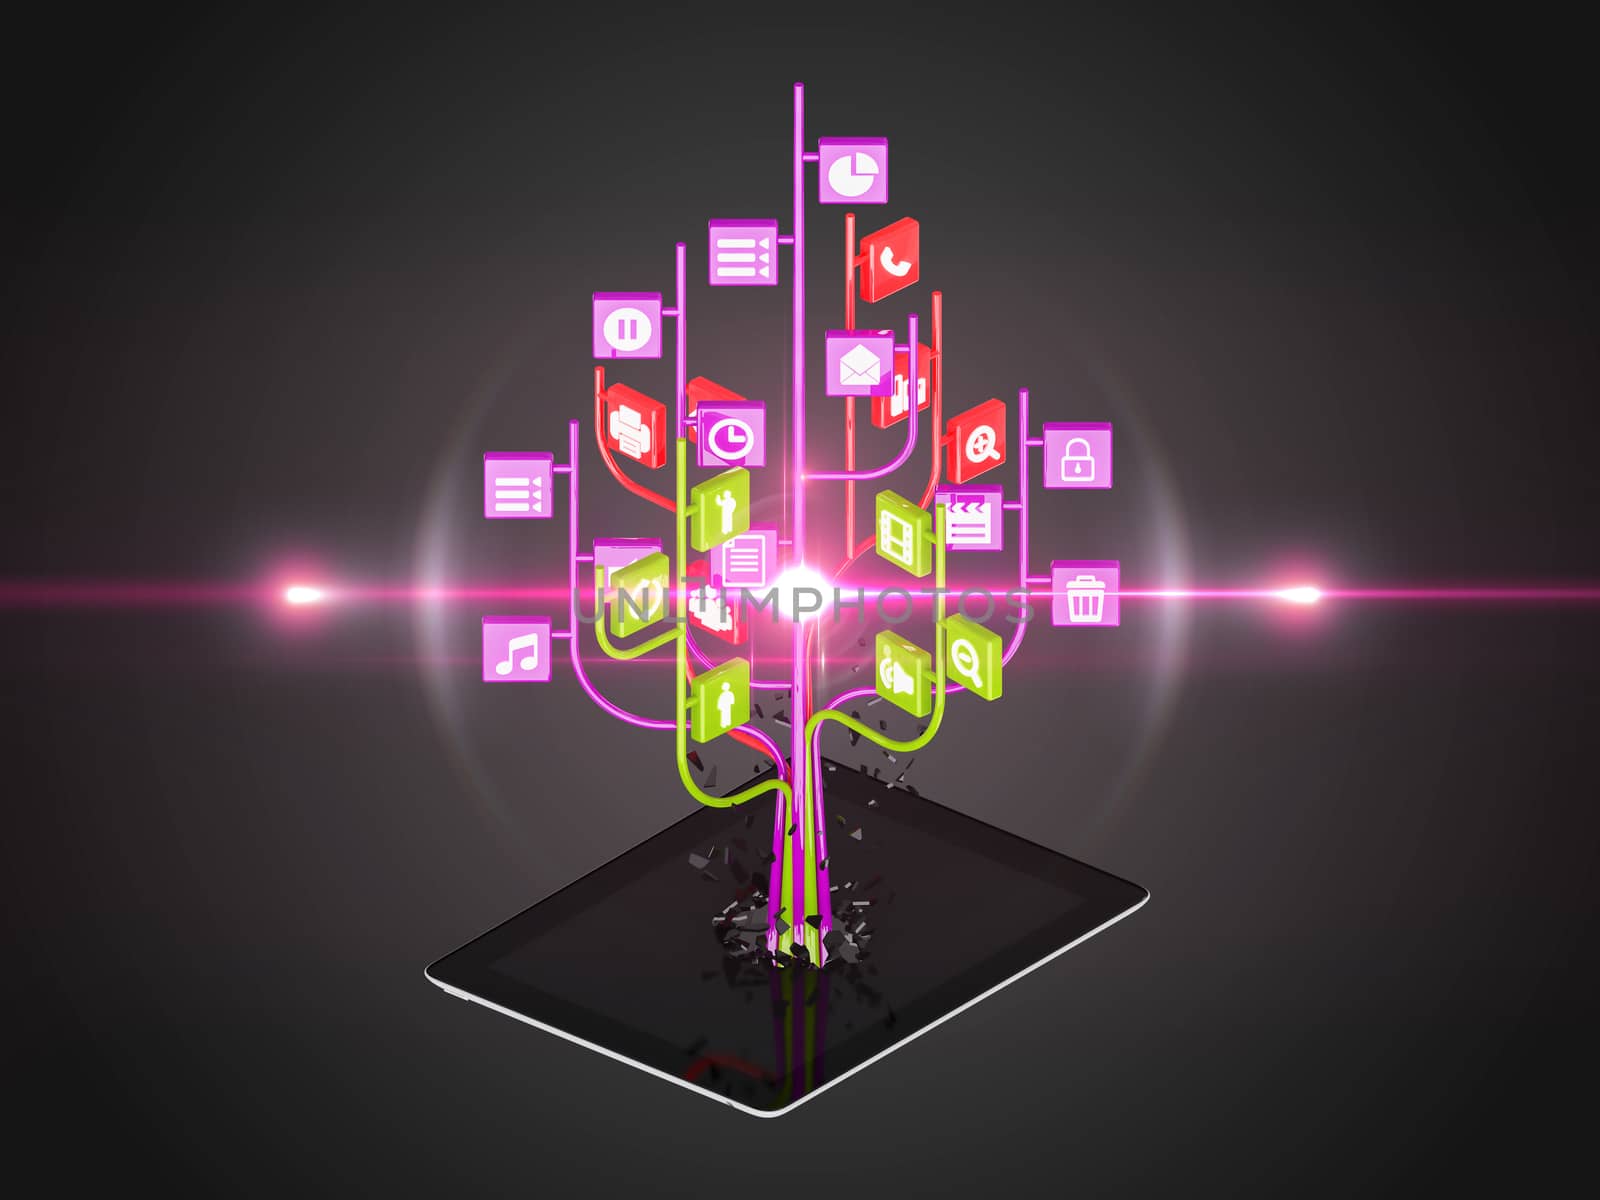 Social media icons set in tree shape on Modern black tablet pc, technology background